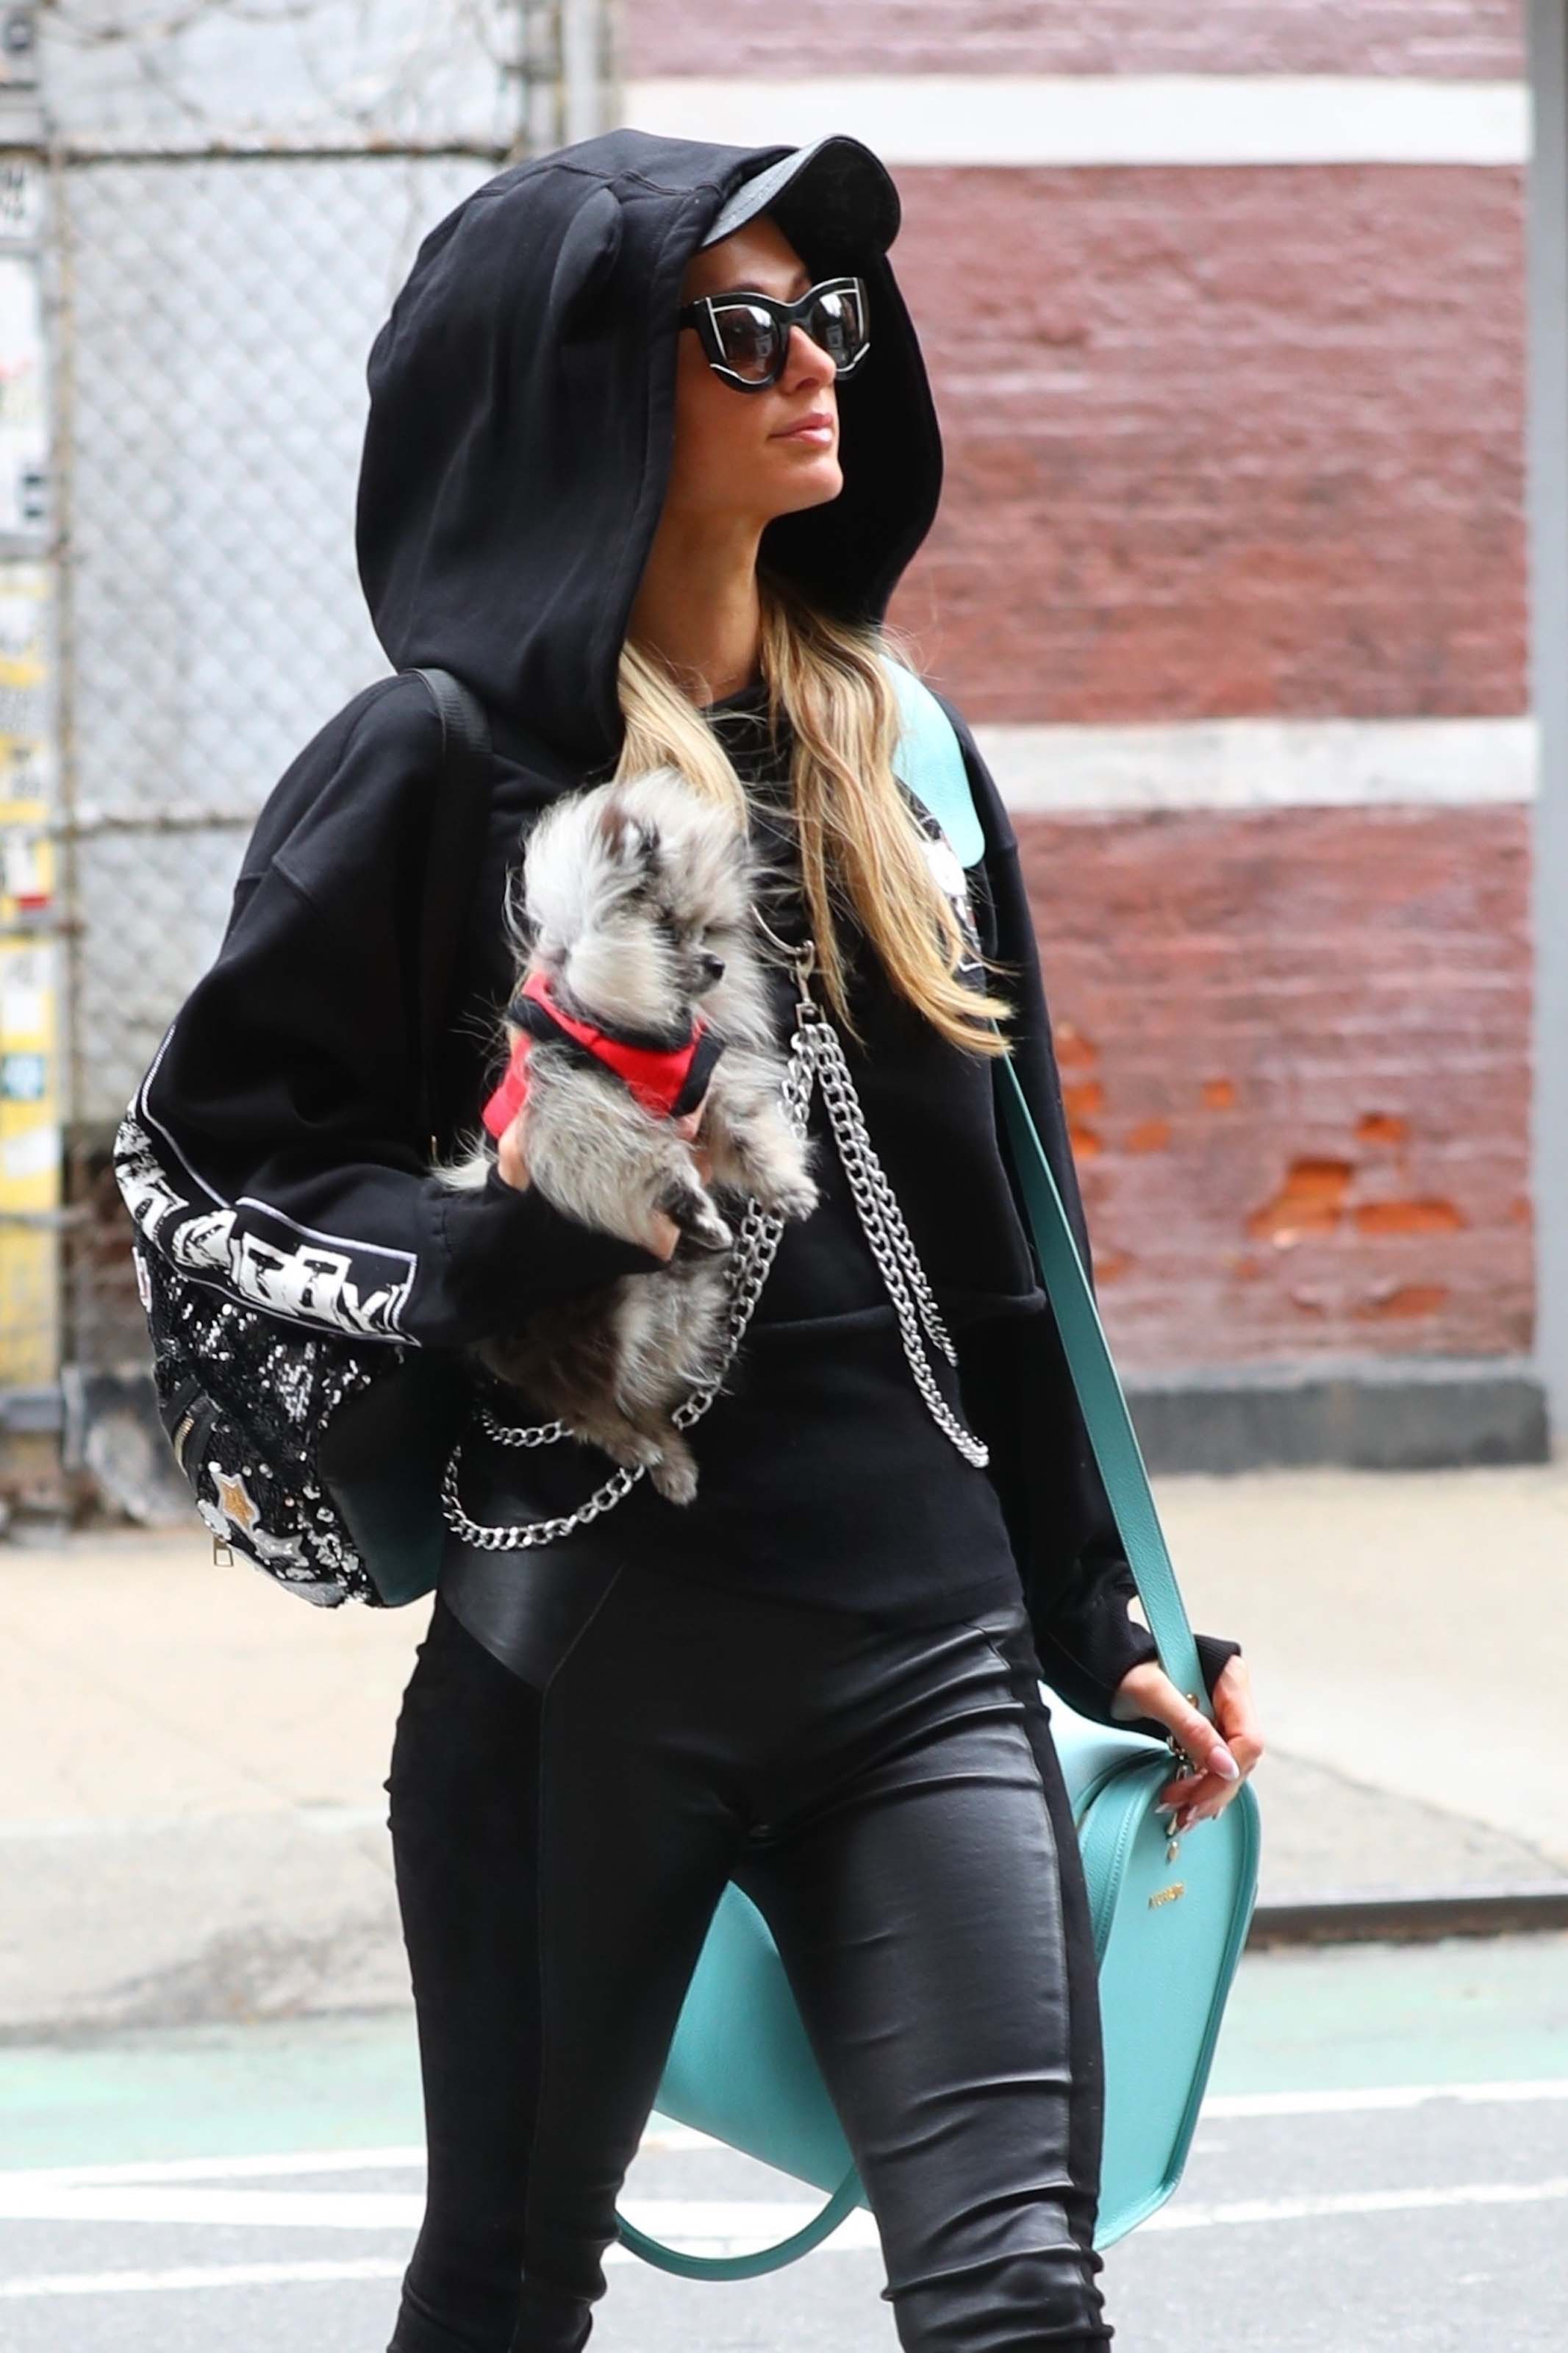 Paris Hilton & Nicky Hilton out shopping in Manhattan’s Soho area